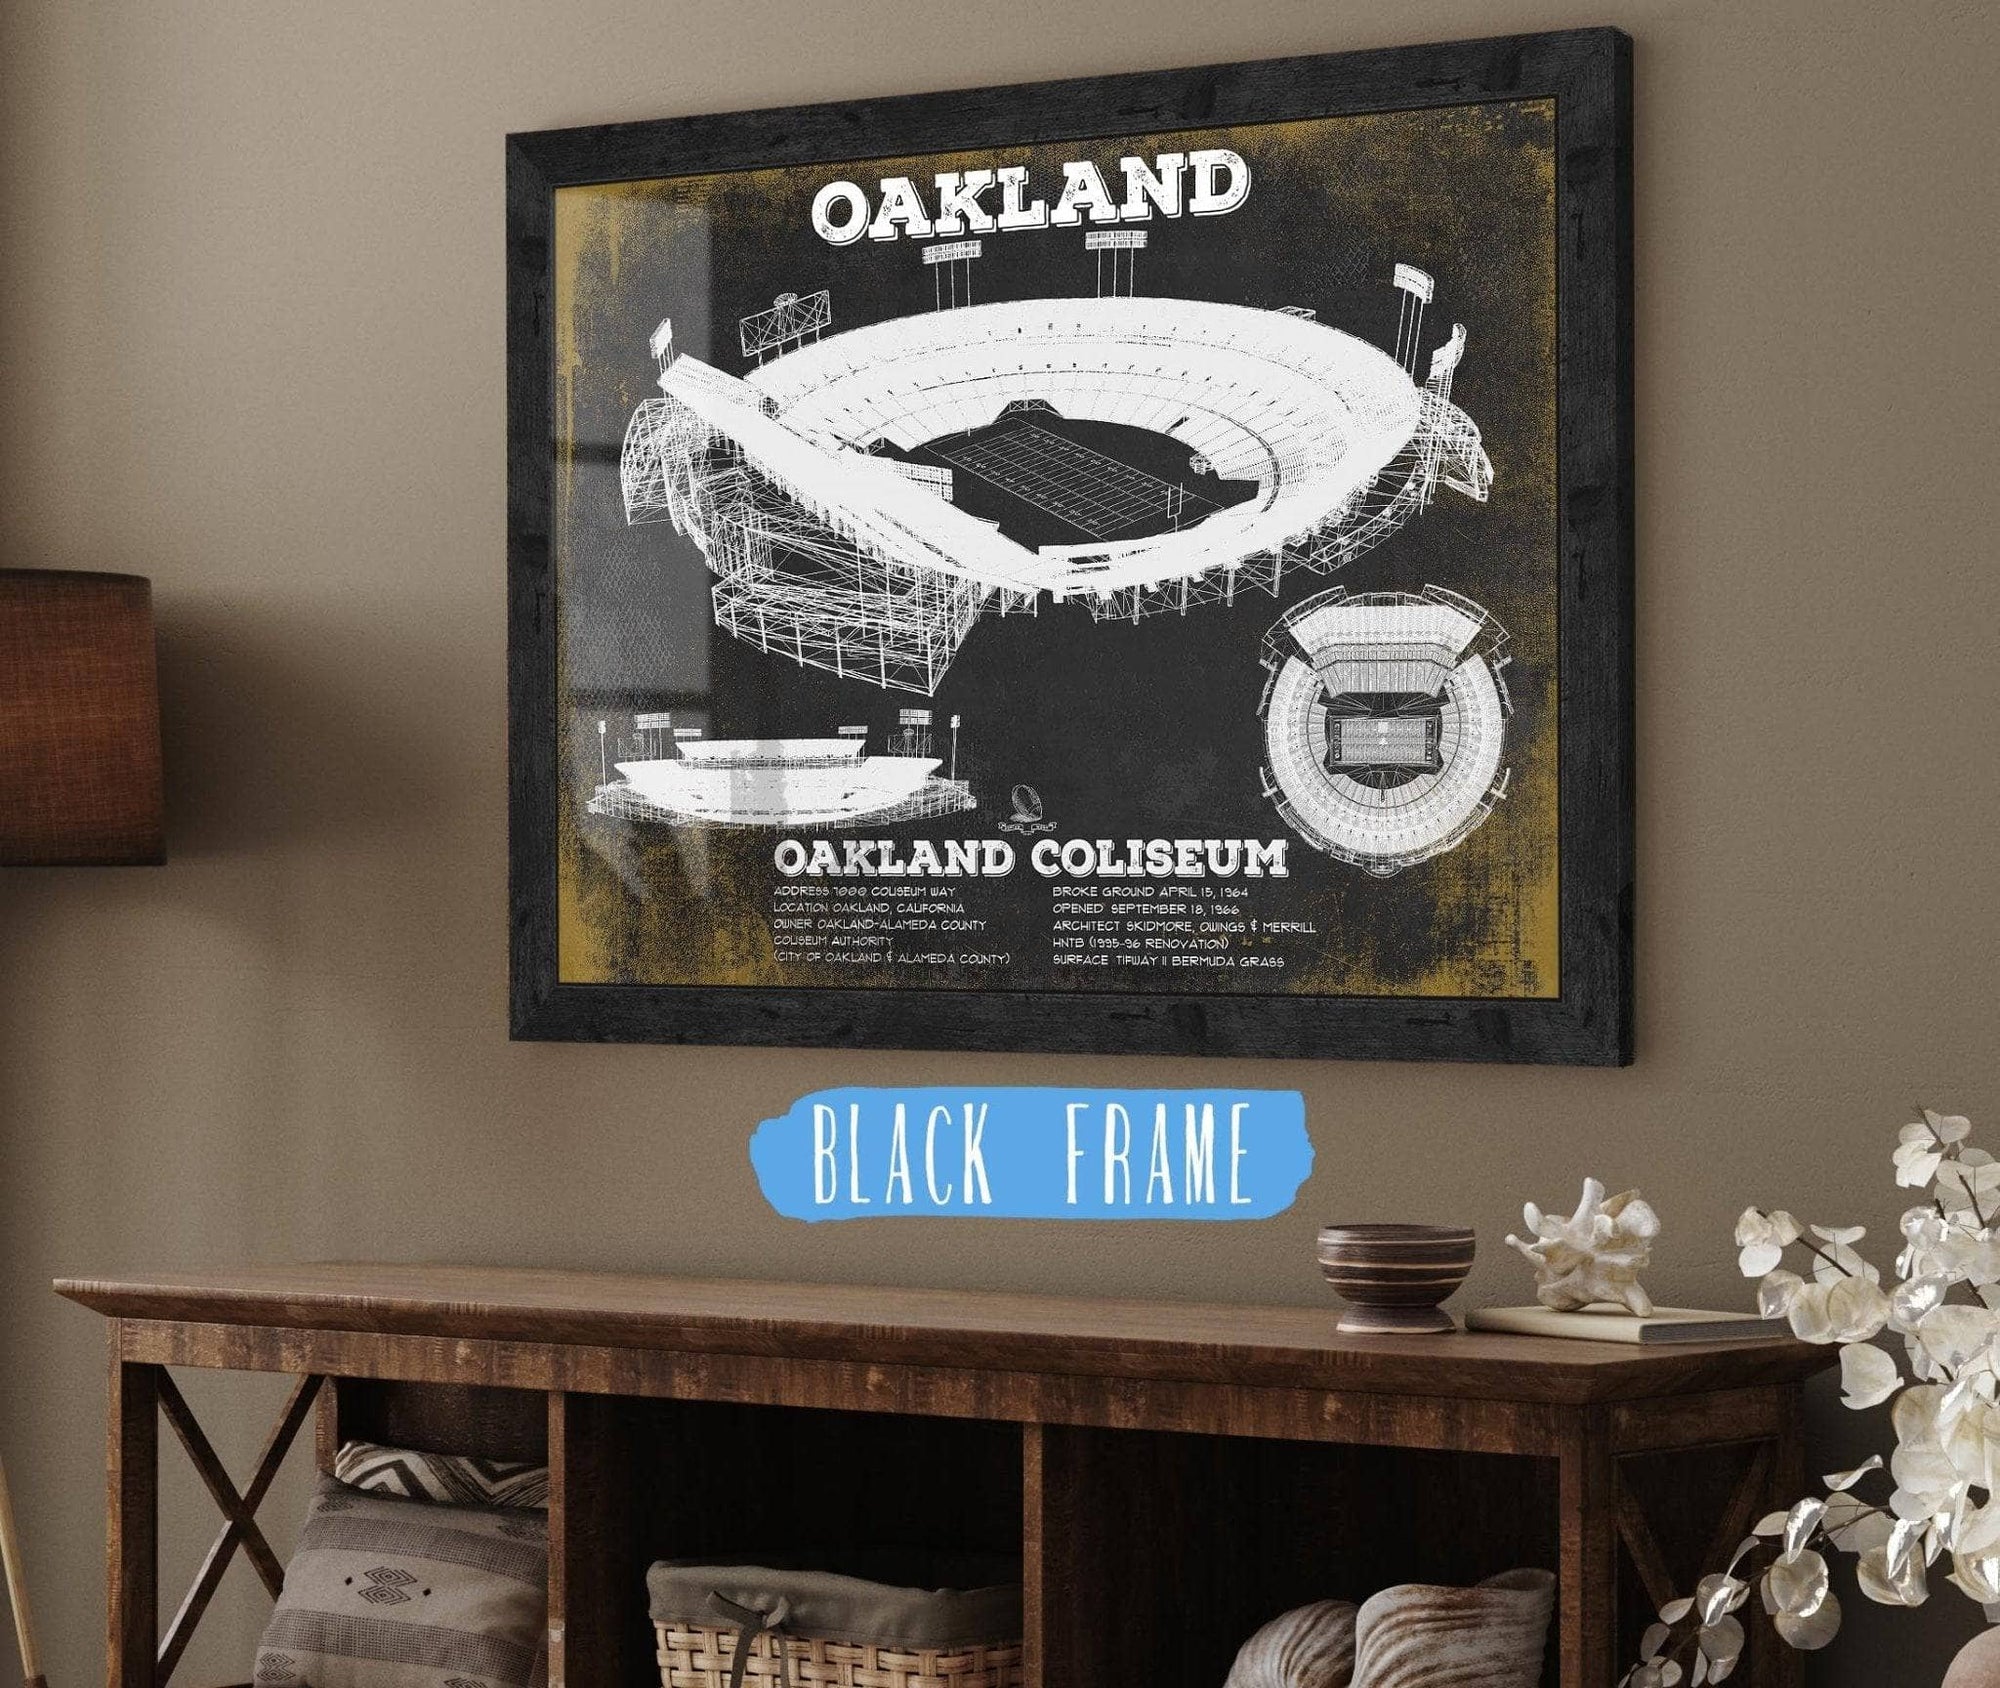 Cutler West Pro Football Collection 14" x 11" / Black Frame Oakland Raiders Team Colors Oakland Coliseum NFL Vintage Football Print 933350154_70428